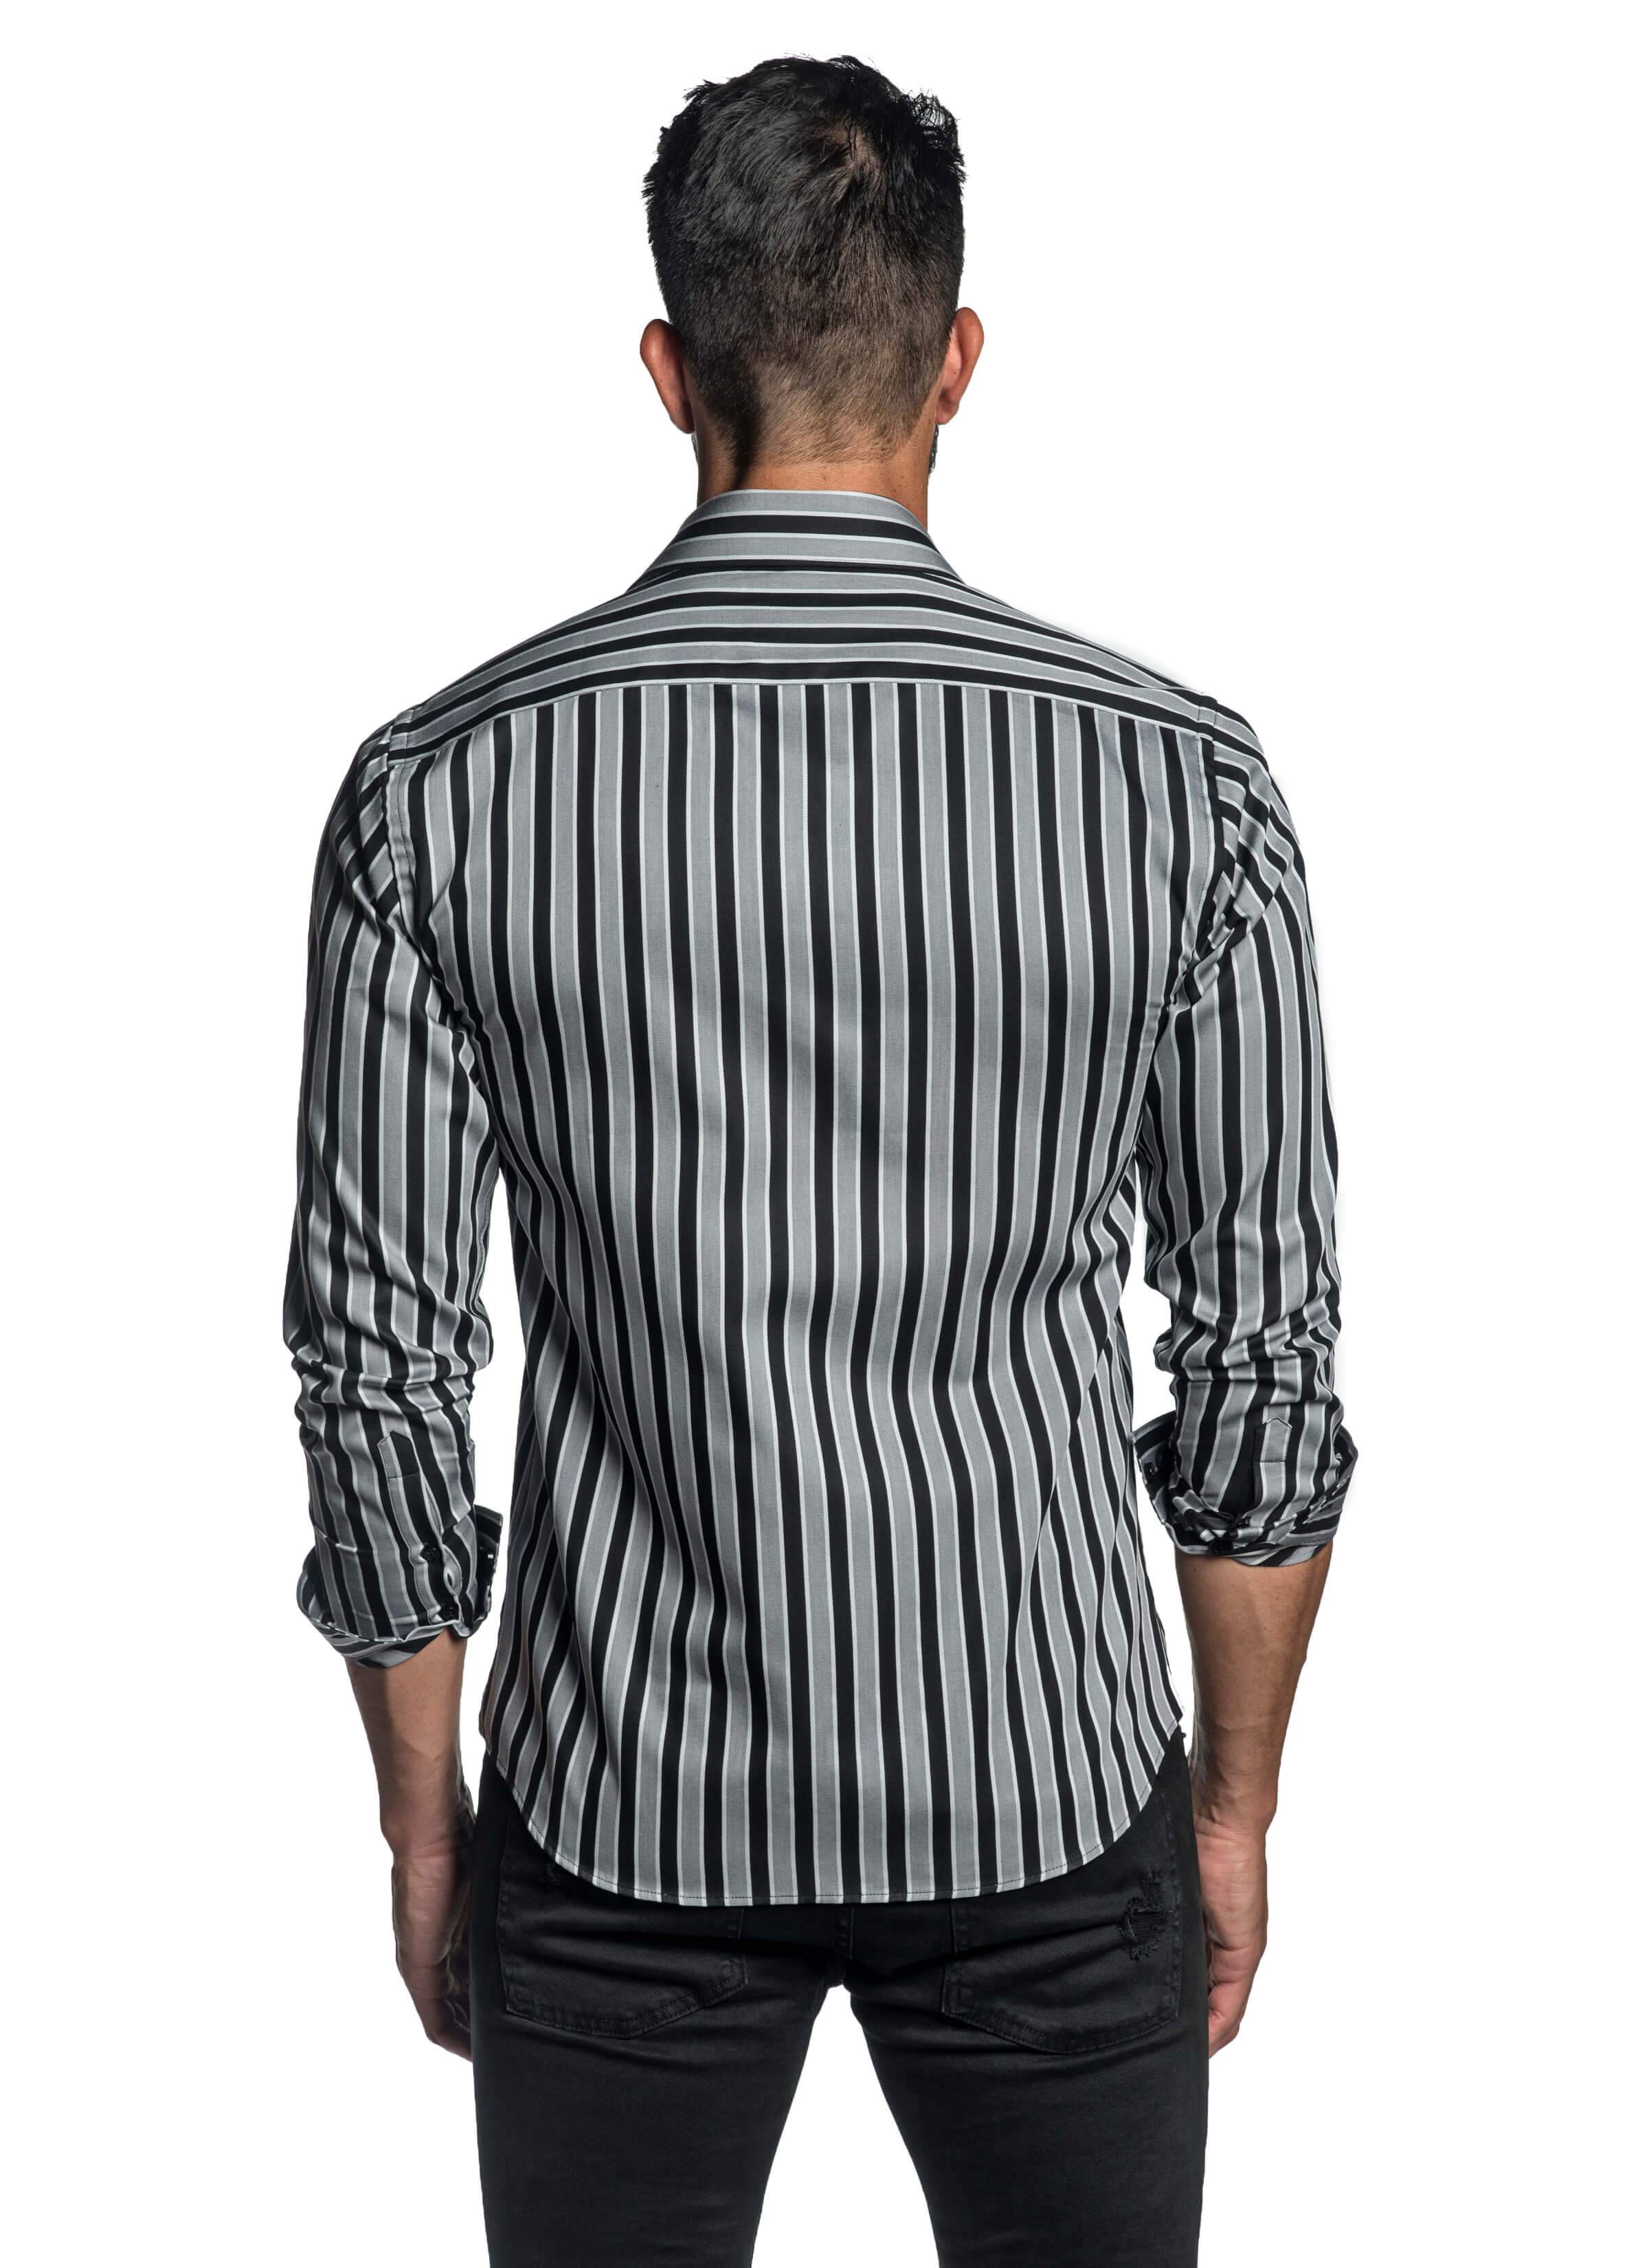 Grey and Black Stripe Shirt for Men T-2606